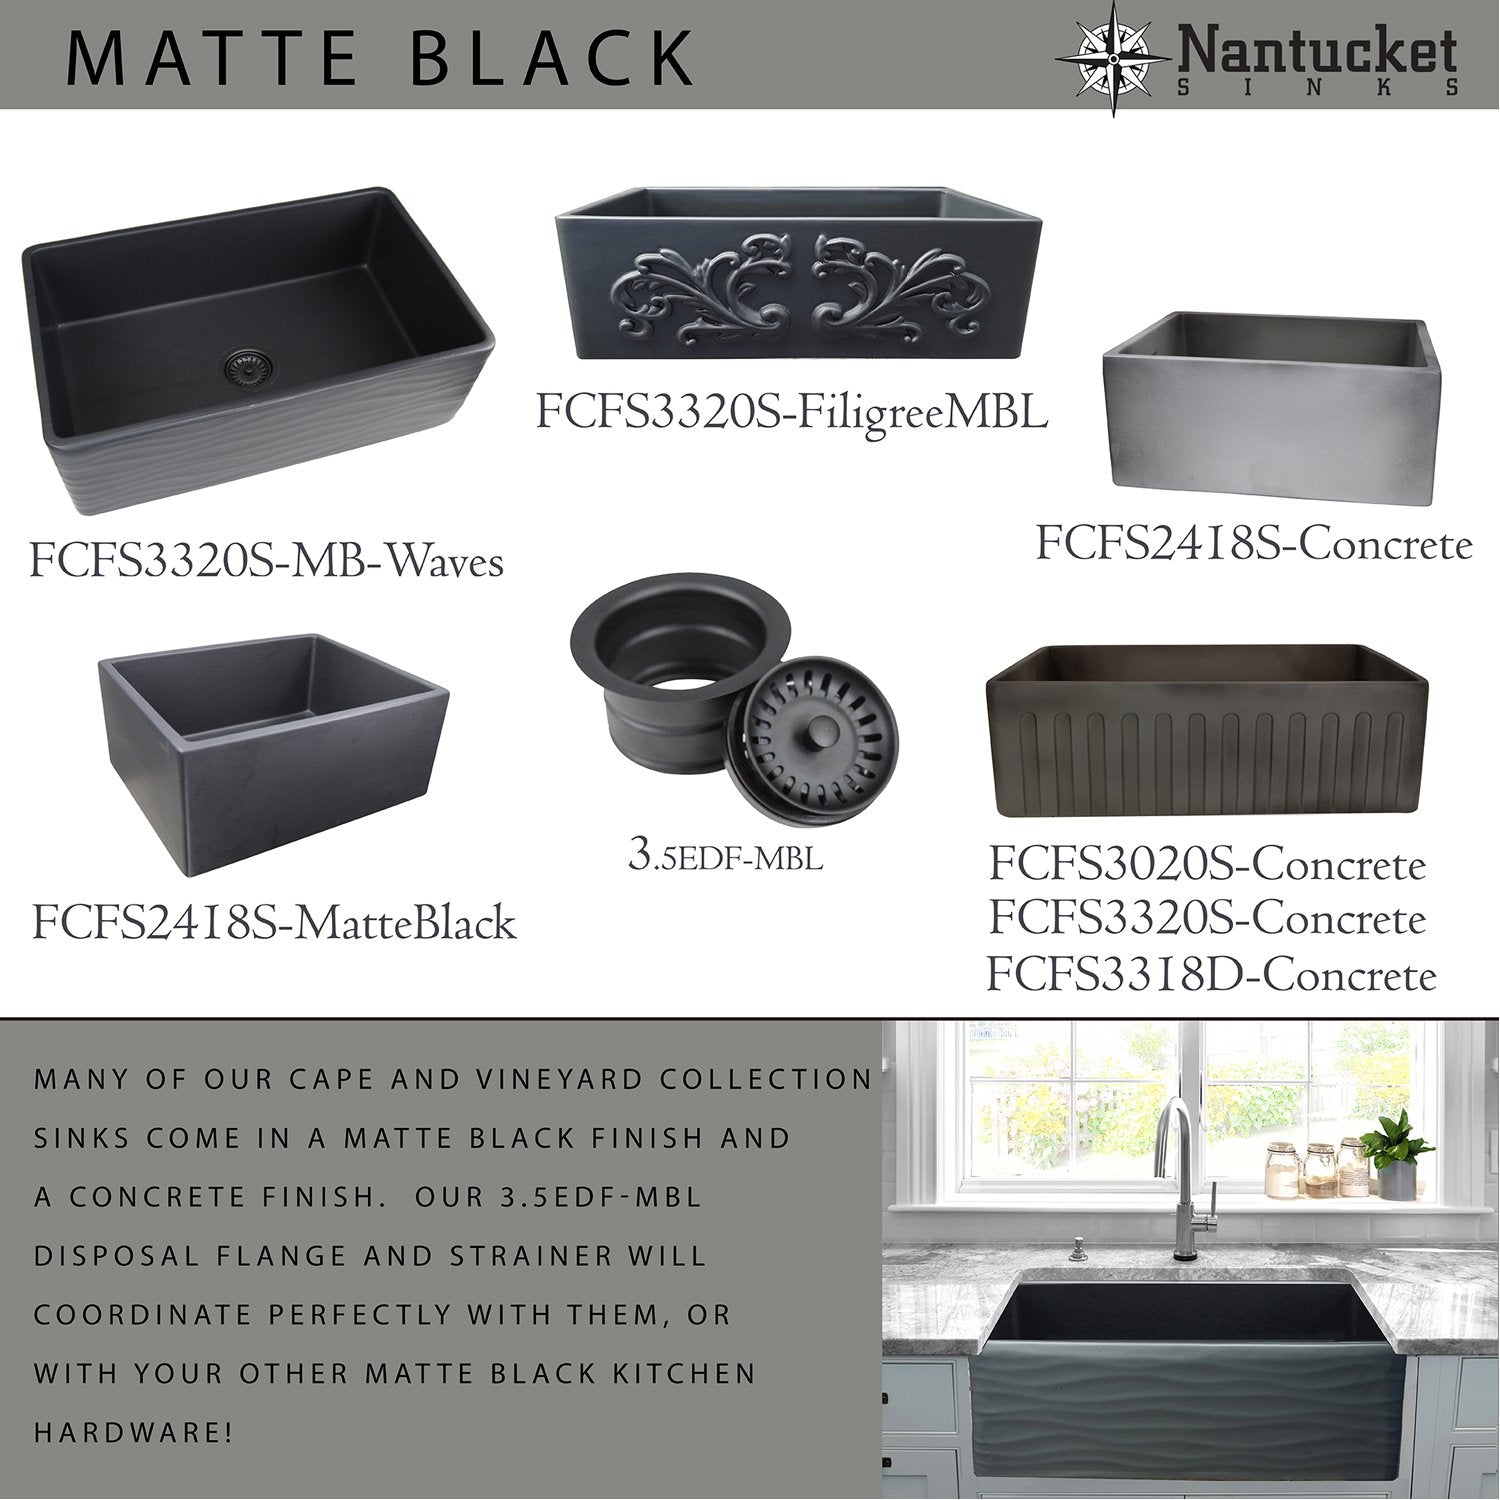 Nantucket Sink 3.5 Inch Extended Flange Disposal Kitchen Drain in Matte Black